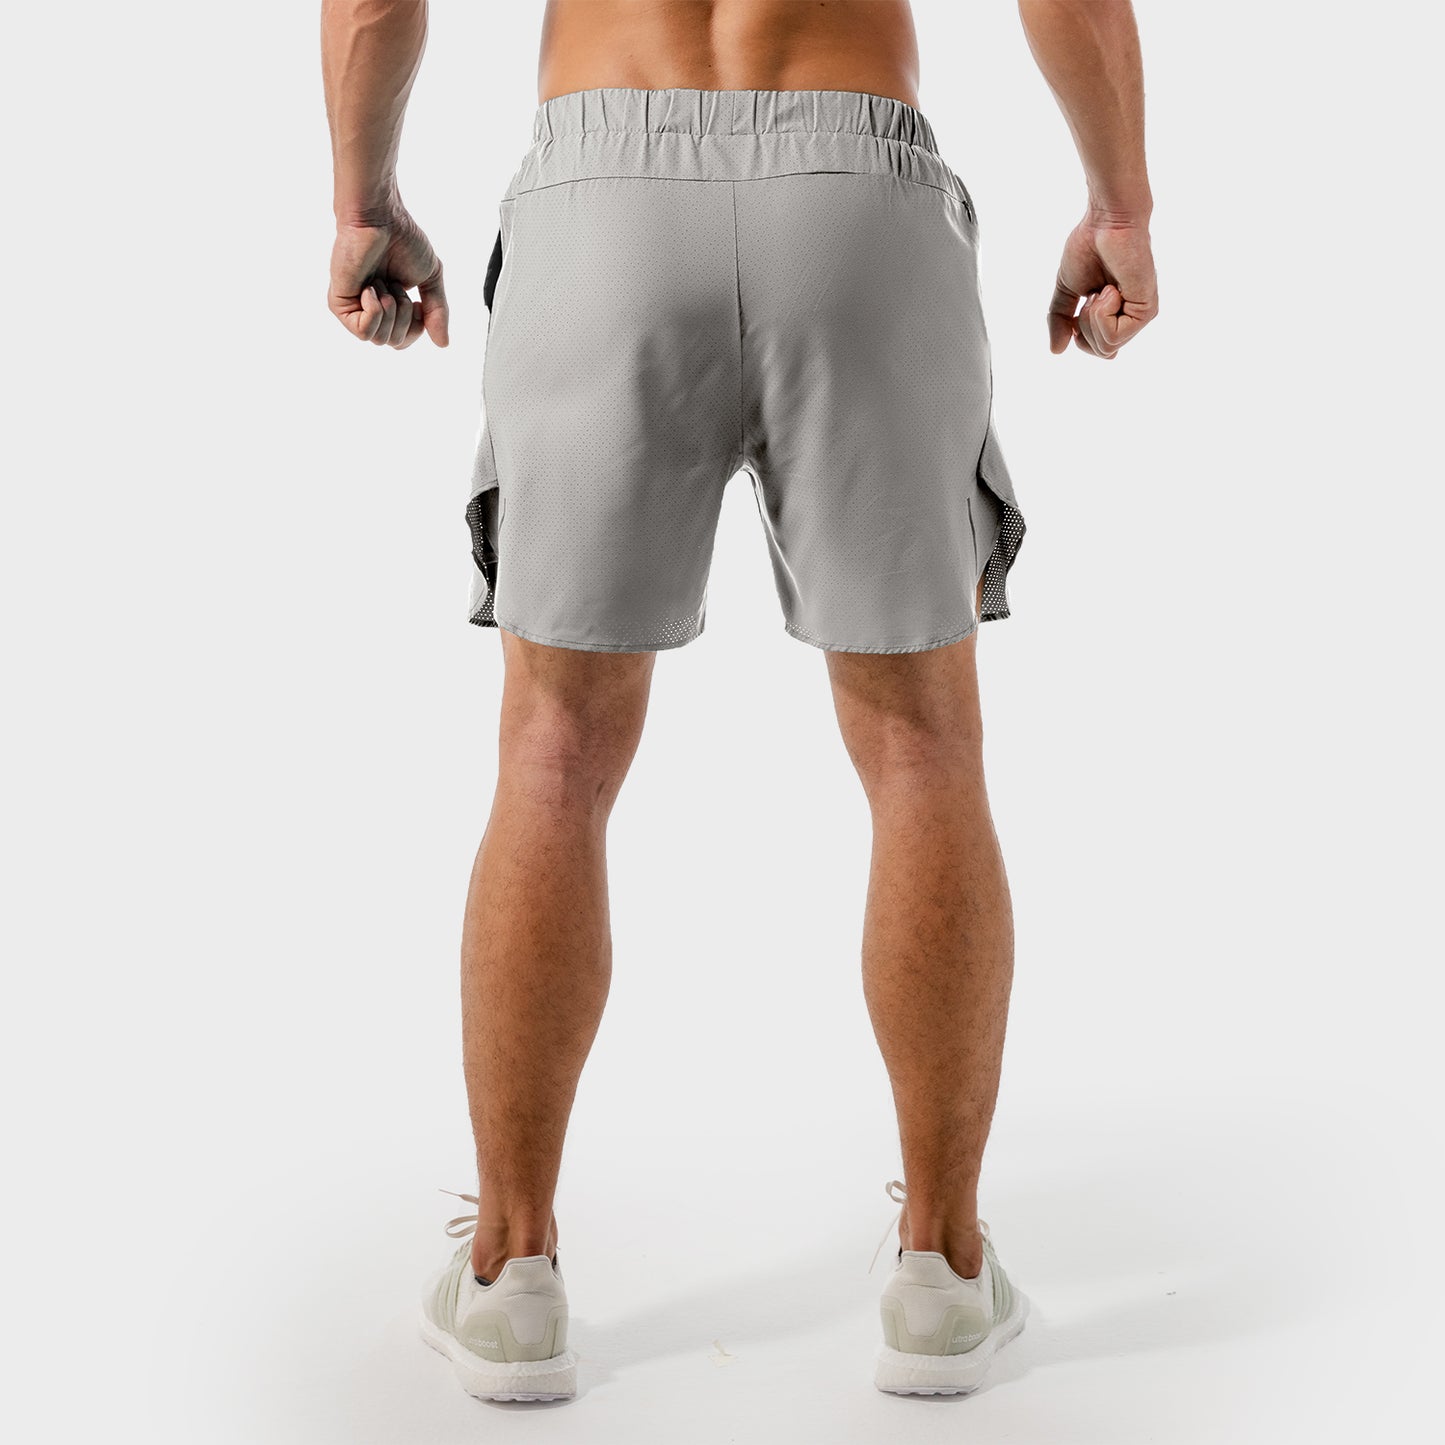 JO, 2-in-1 Dry Tech Shorts 2.0 - Grey, Gym Shorts Men